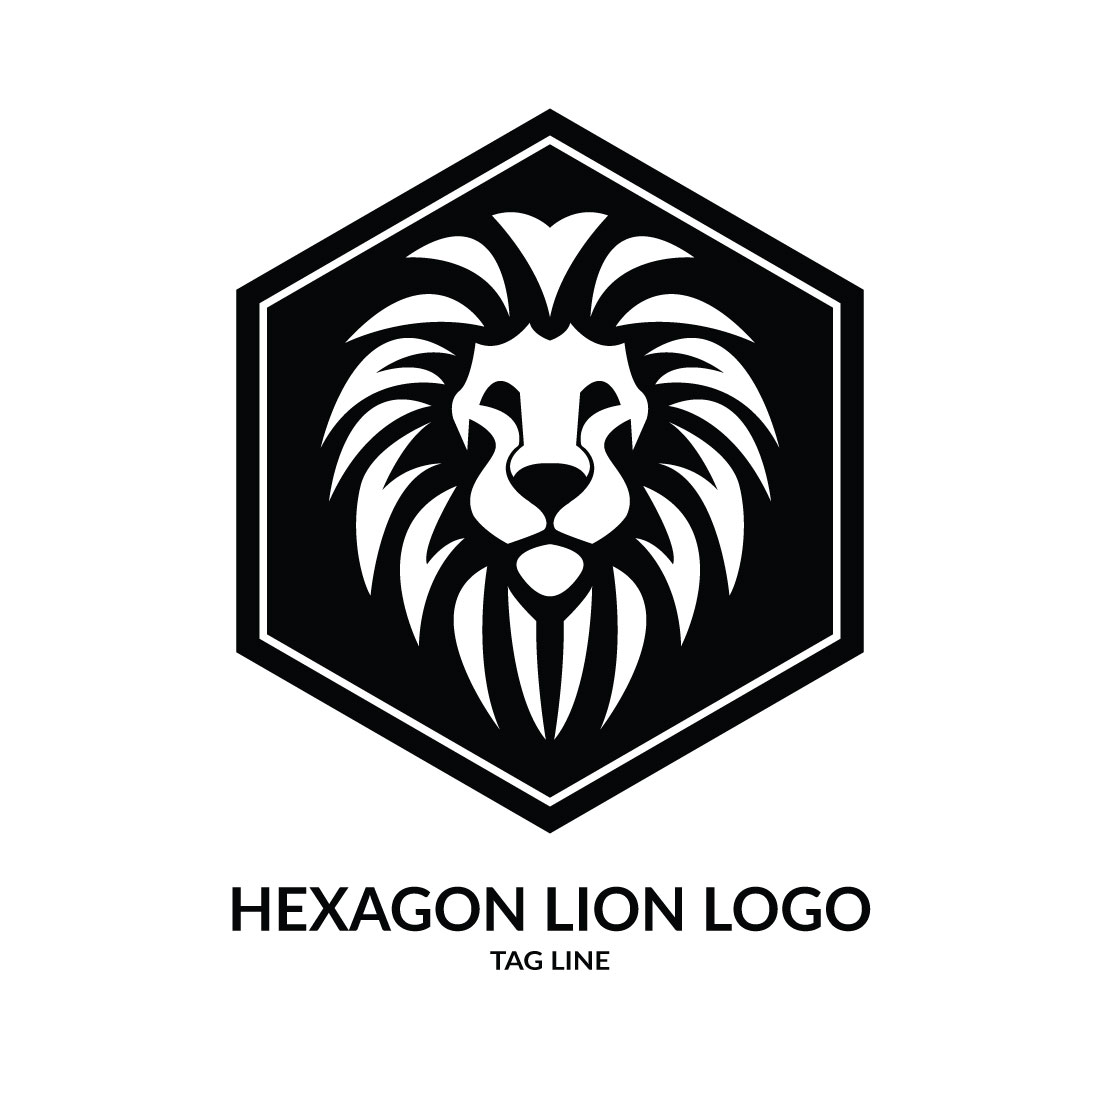 Hexagon Lion Head Logo Template preview image.